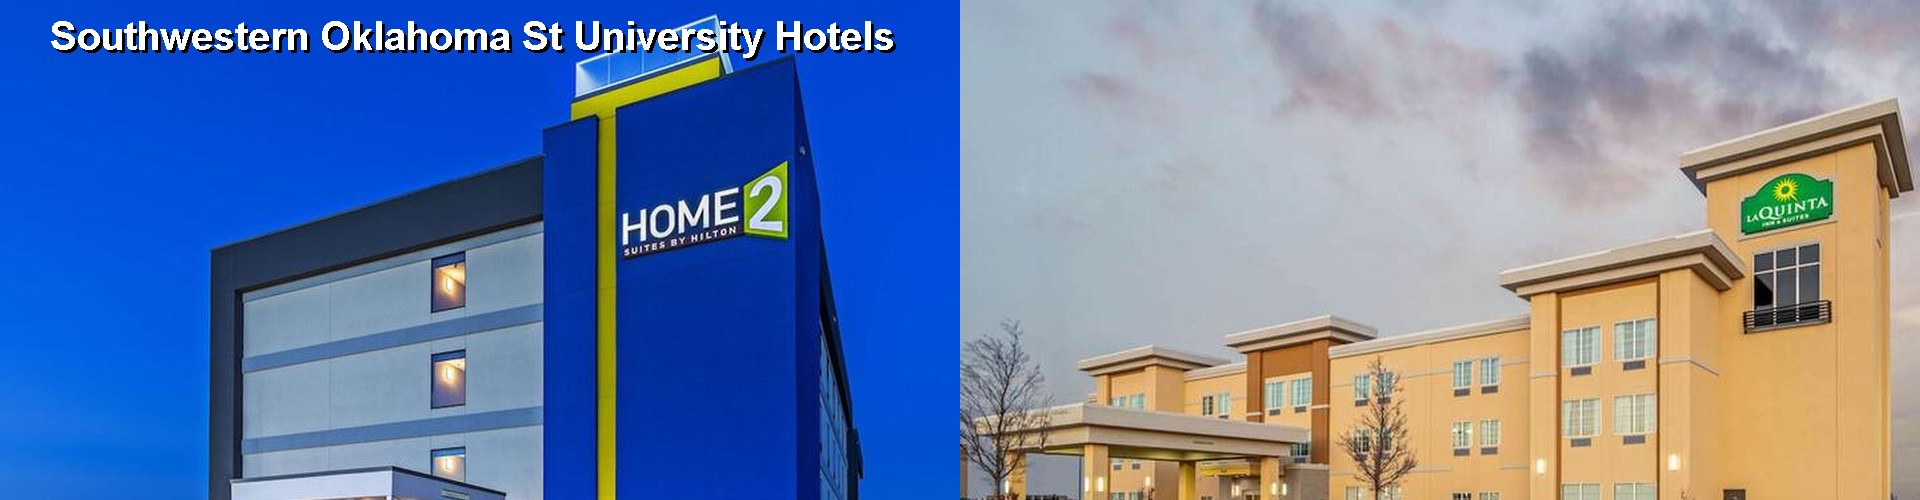 5 Best Hotels near Southwestern Oklahoma St University